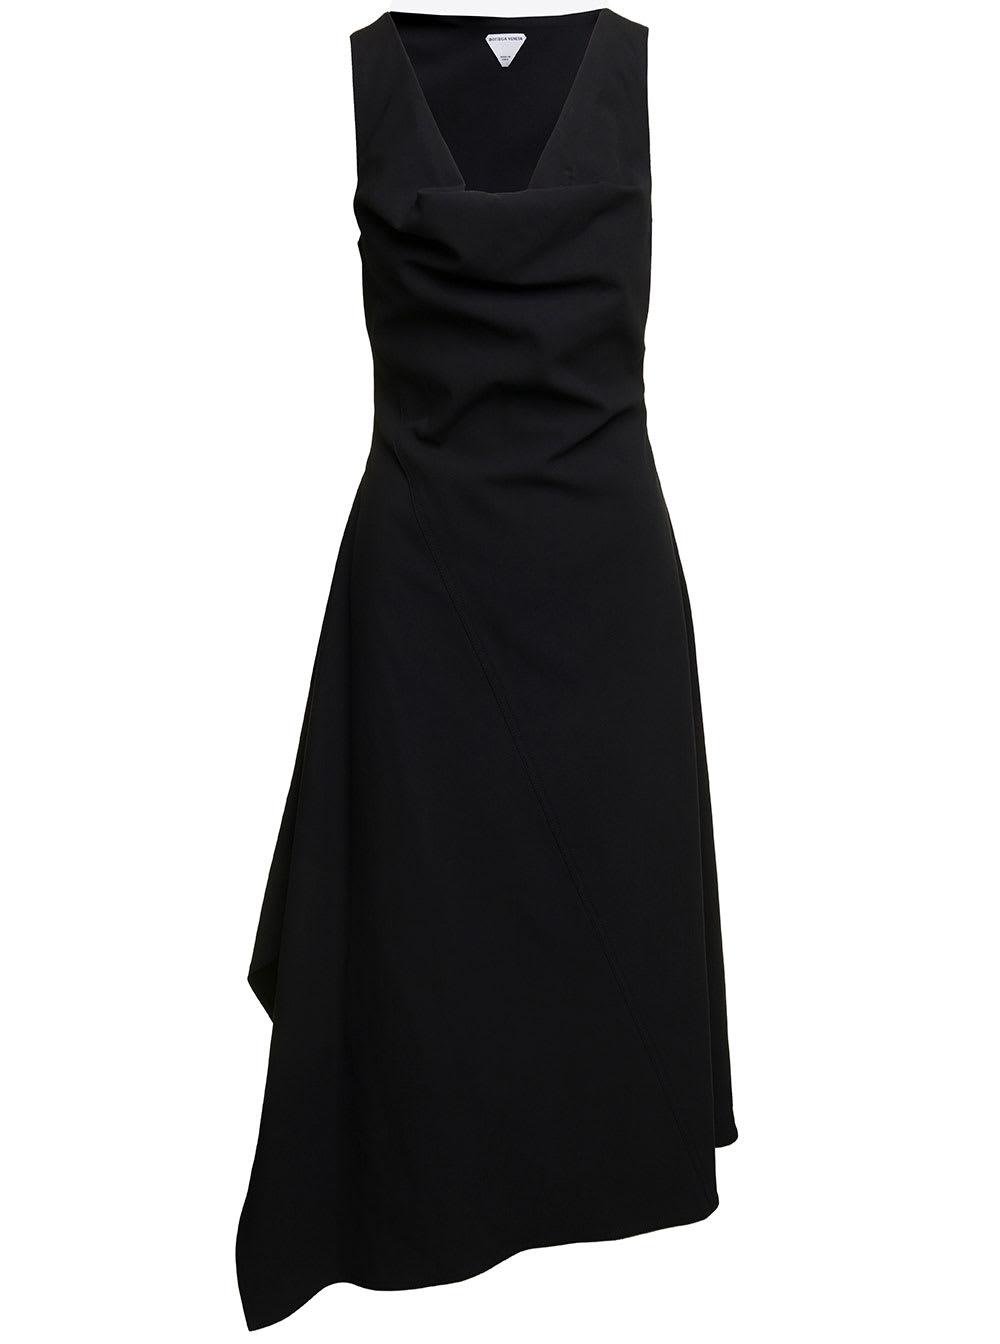 BOTTEGA VENETA MINI BLACK ASYMMETRIC DRESS WITH SQUARE AND DRAPED NECKLINE IN COTTON BLEND WOMAN